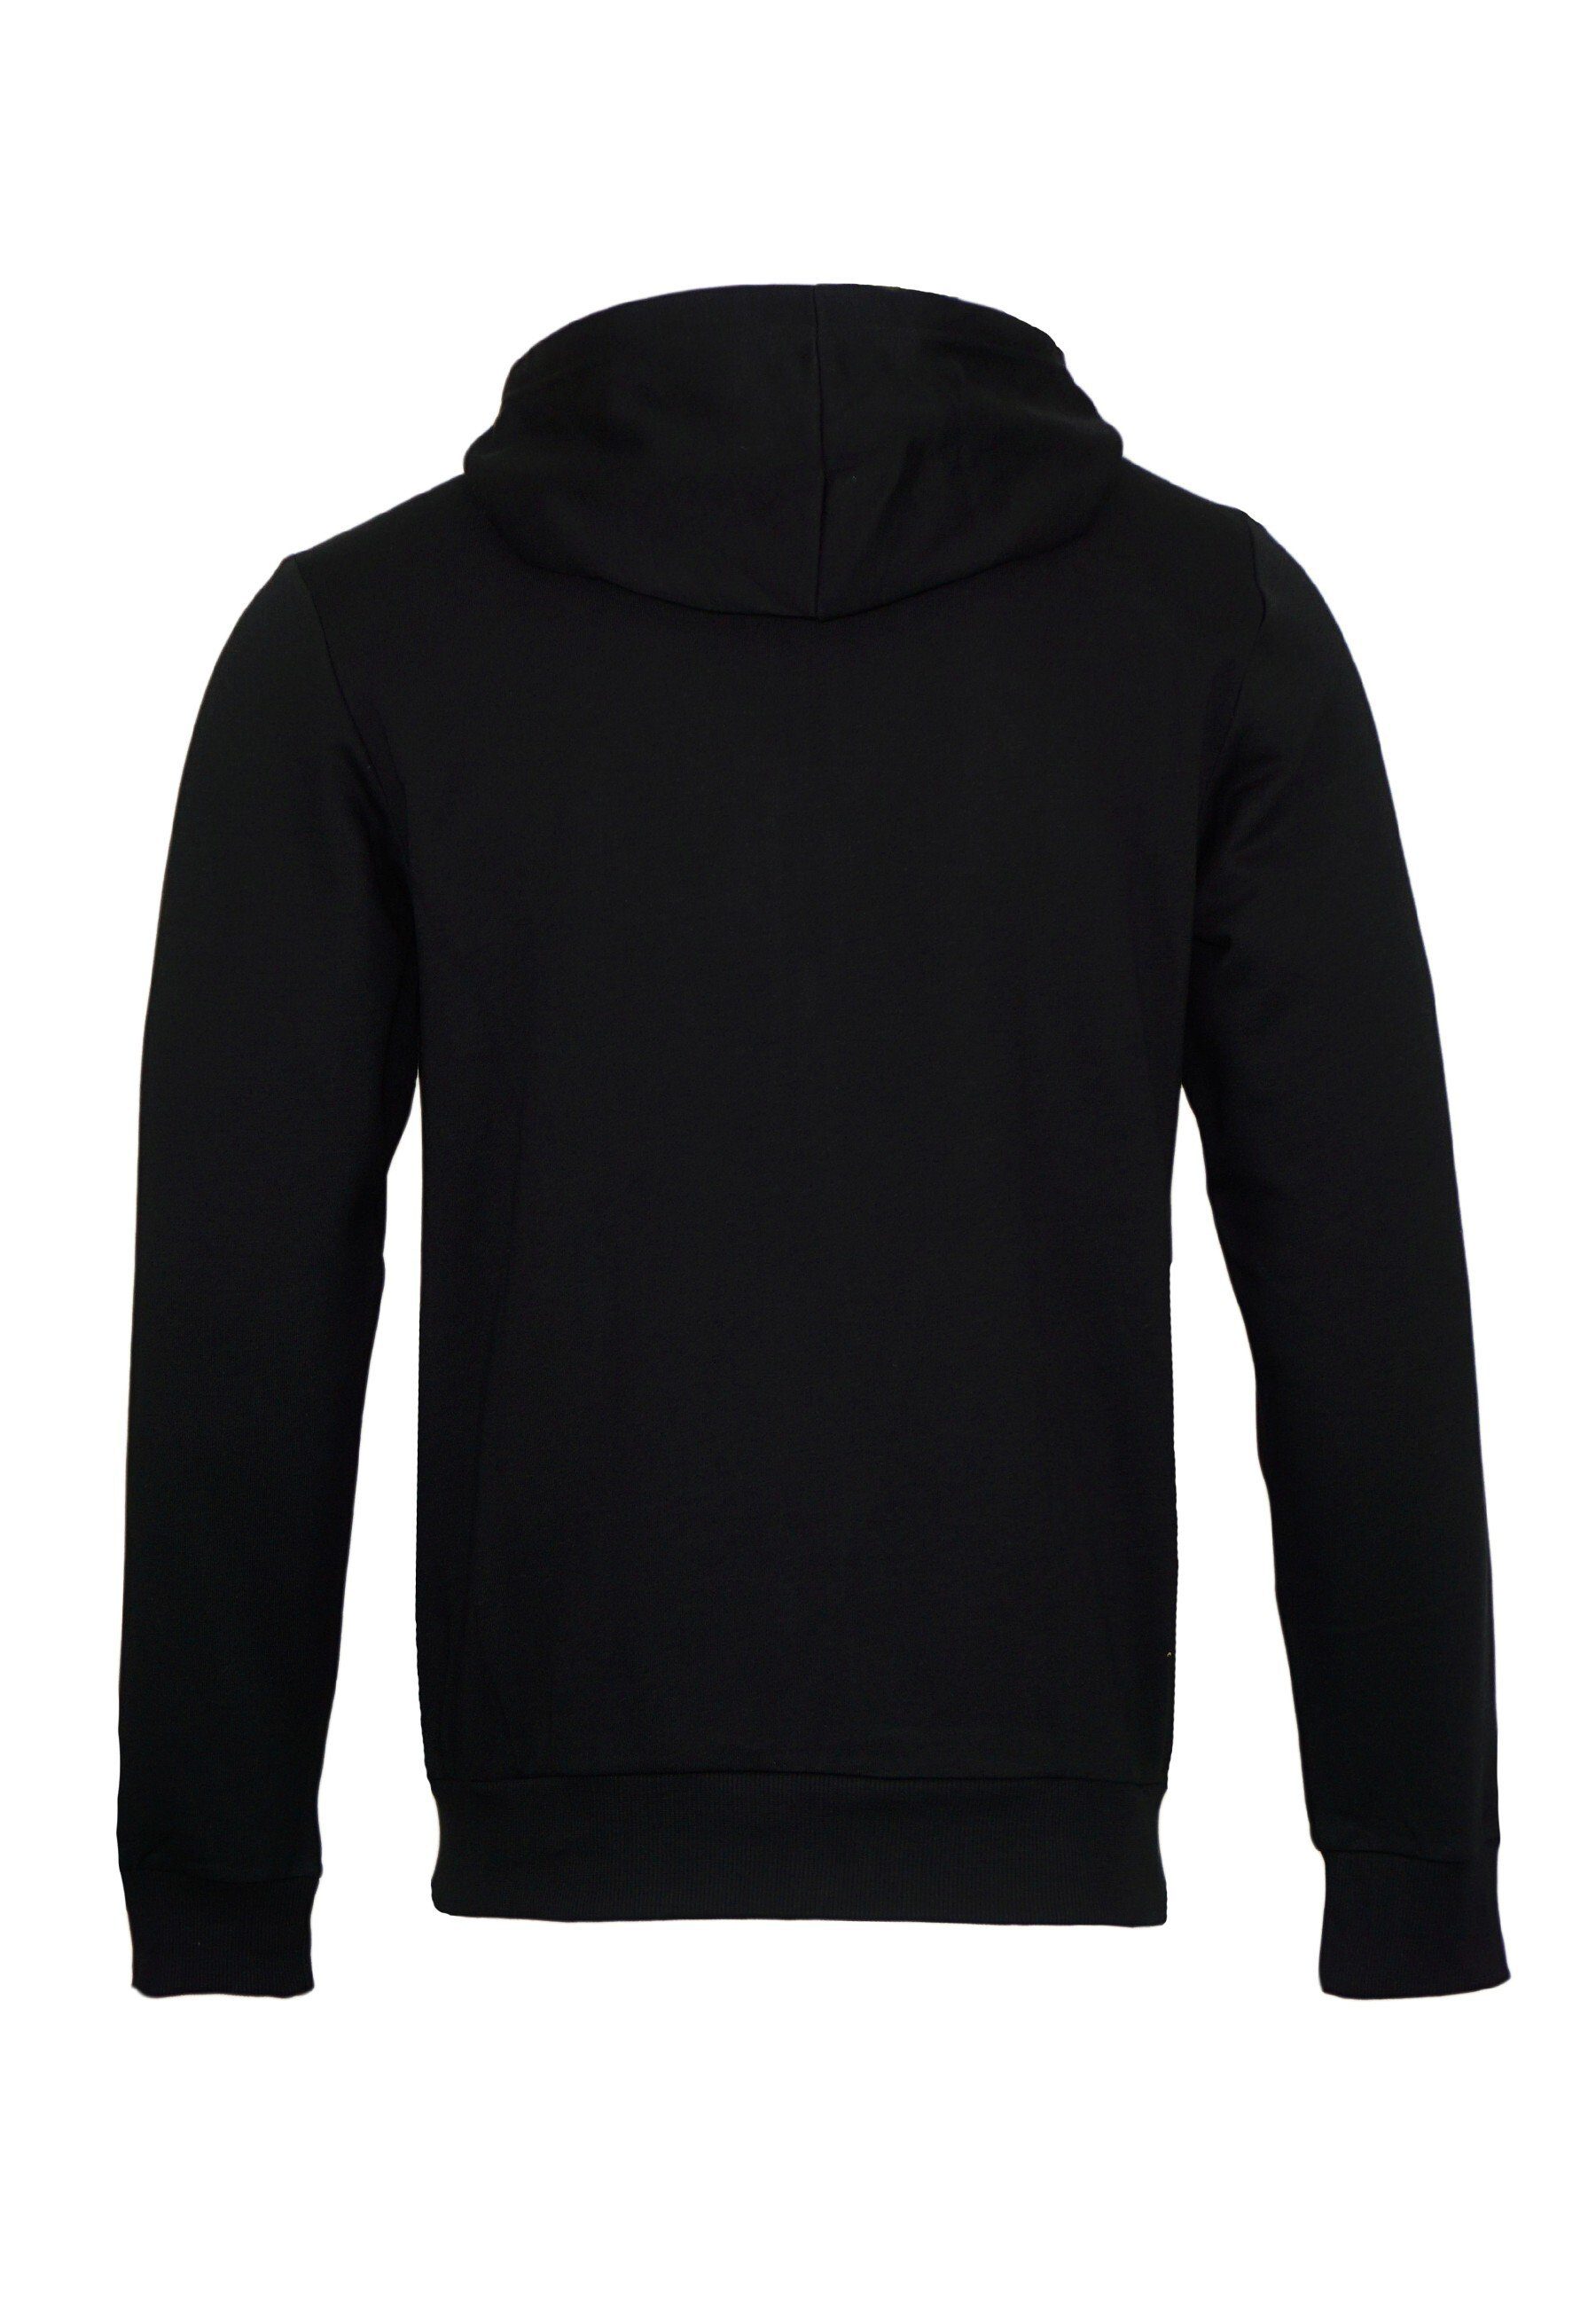 Emporio Armani Sweatjacke Sweatshirt (1-tlg) Kapuze Knit Hoodie mit schwarz